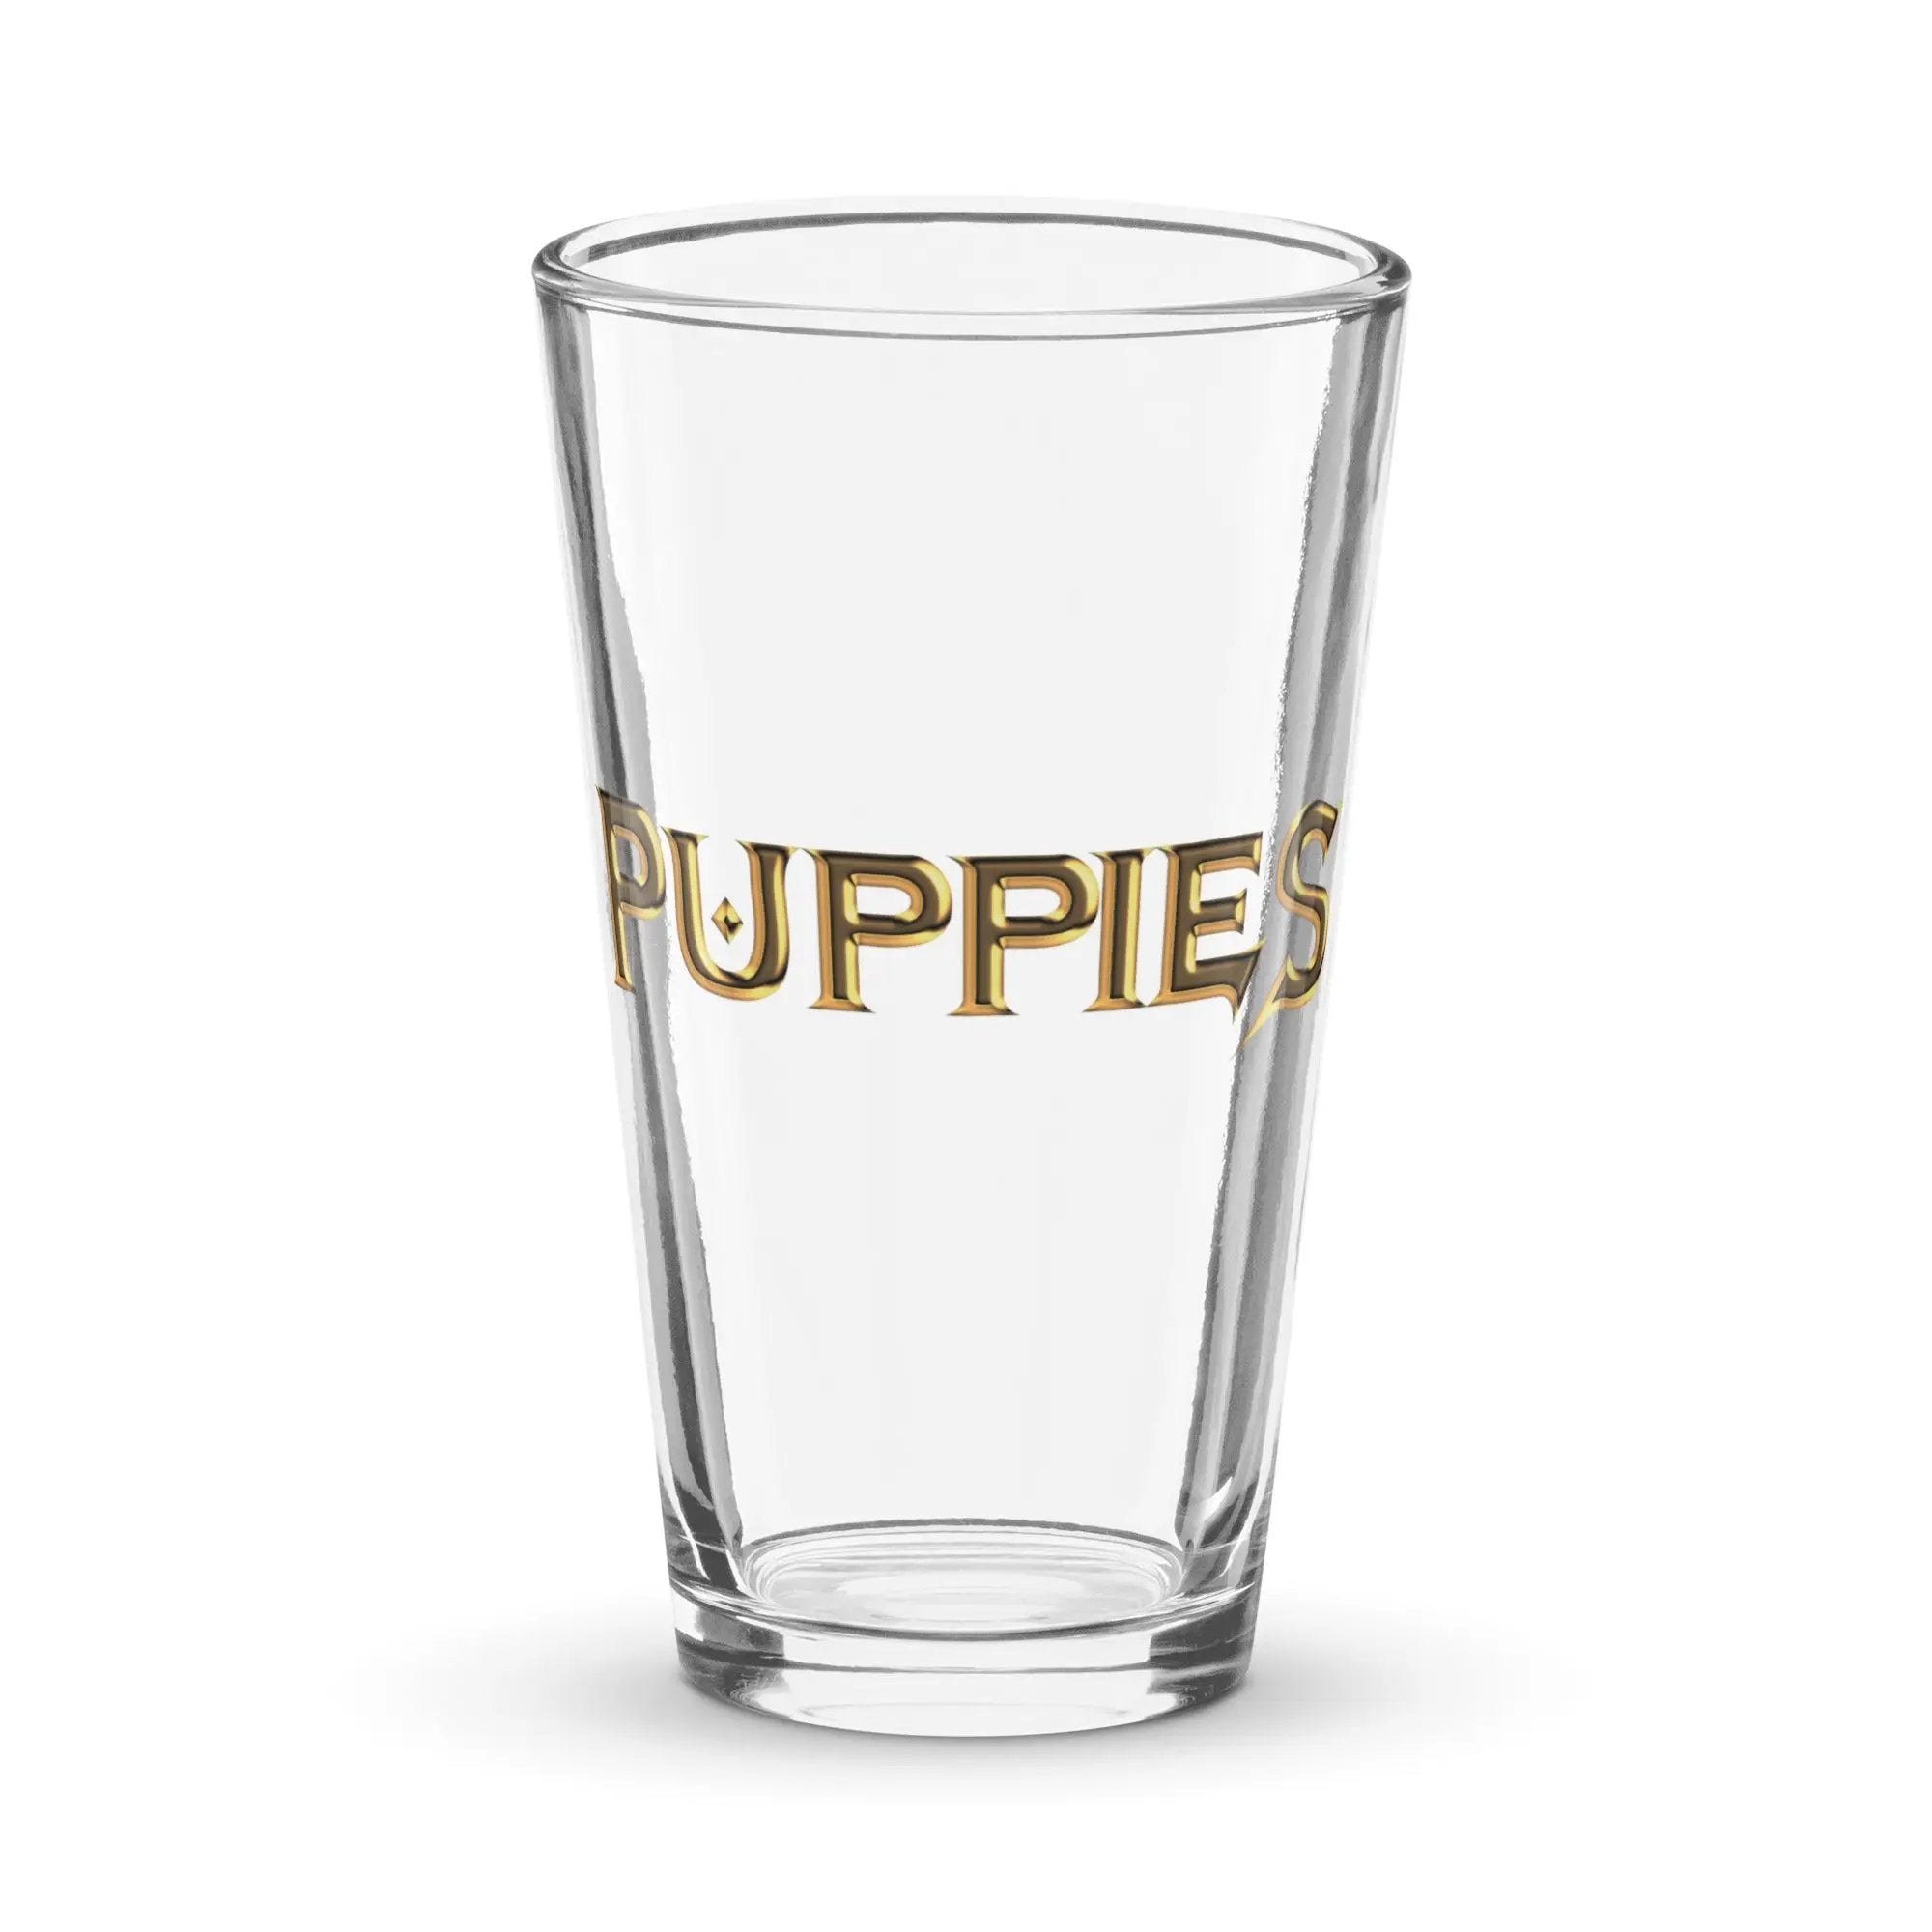 Mega-Puppies Shaker pint glass